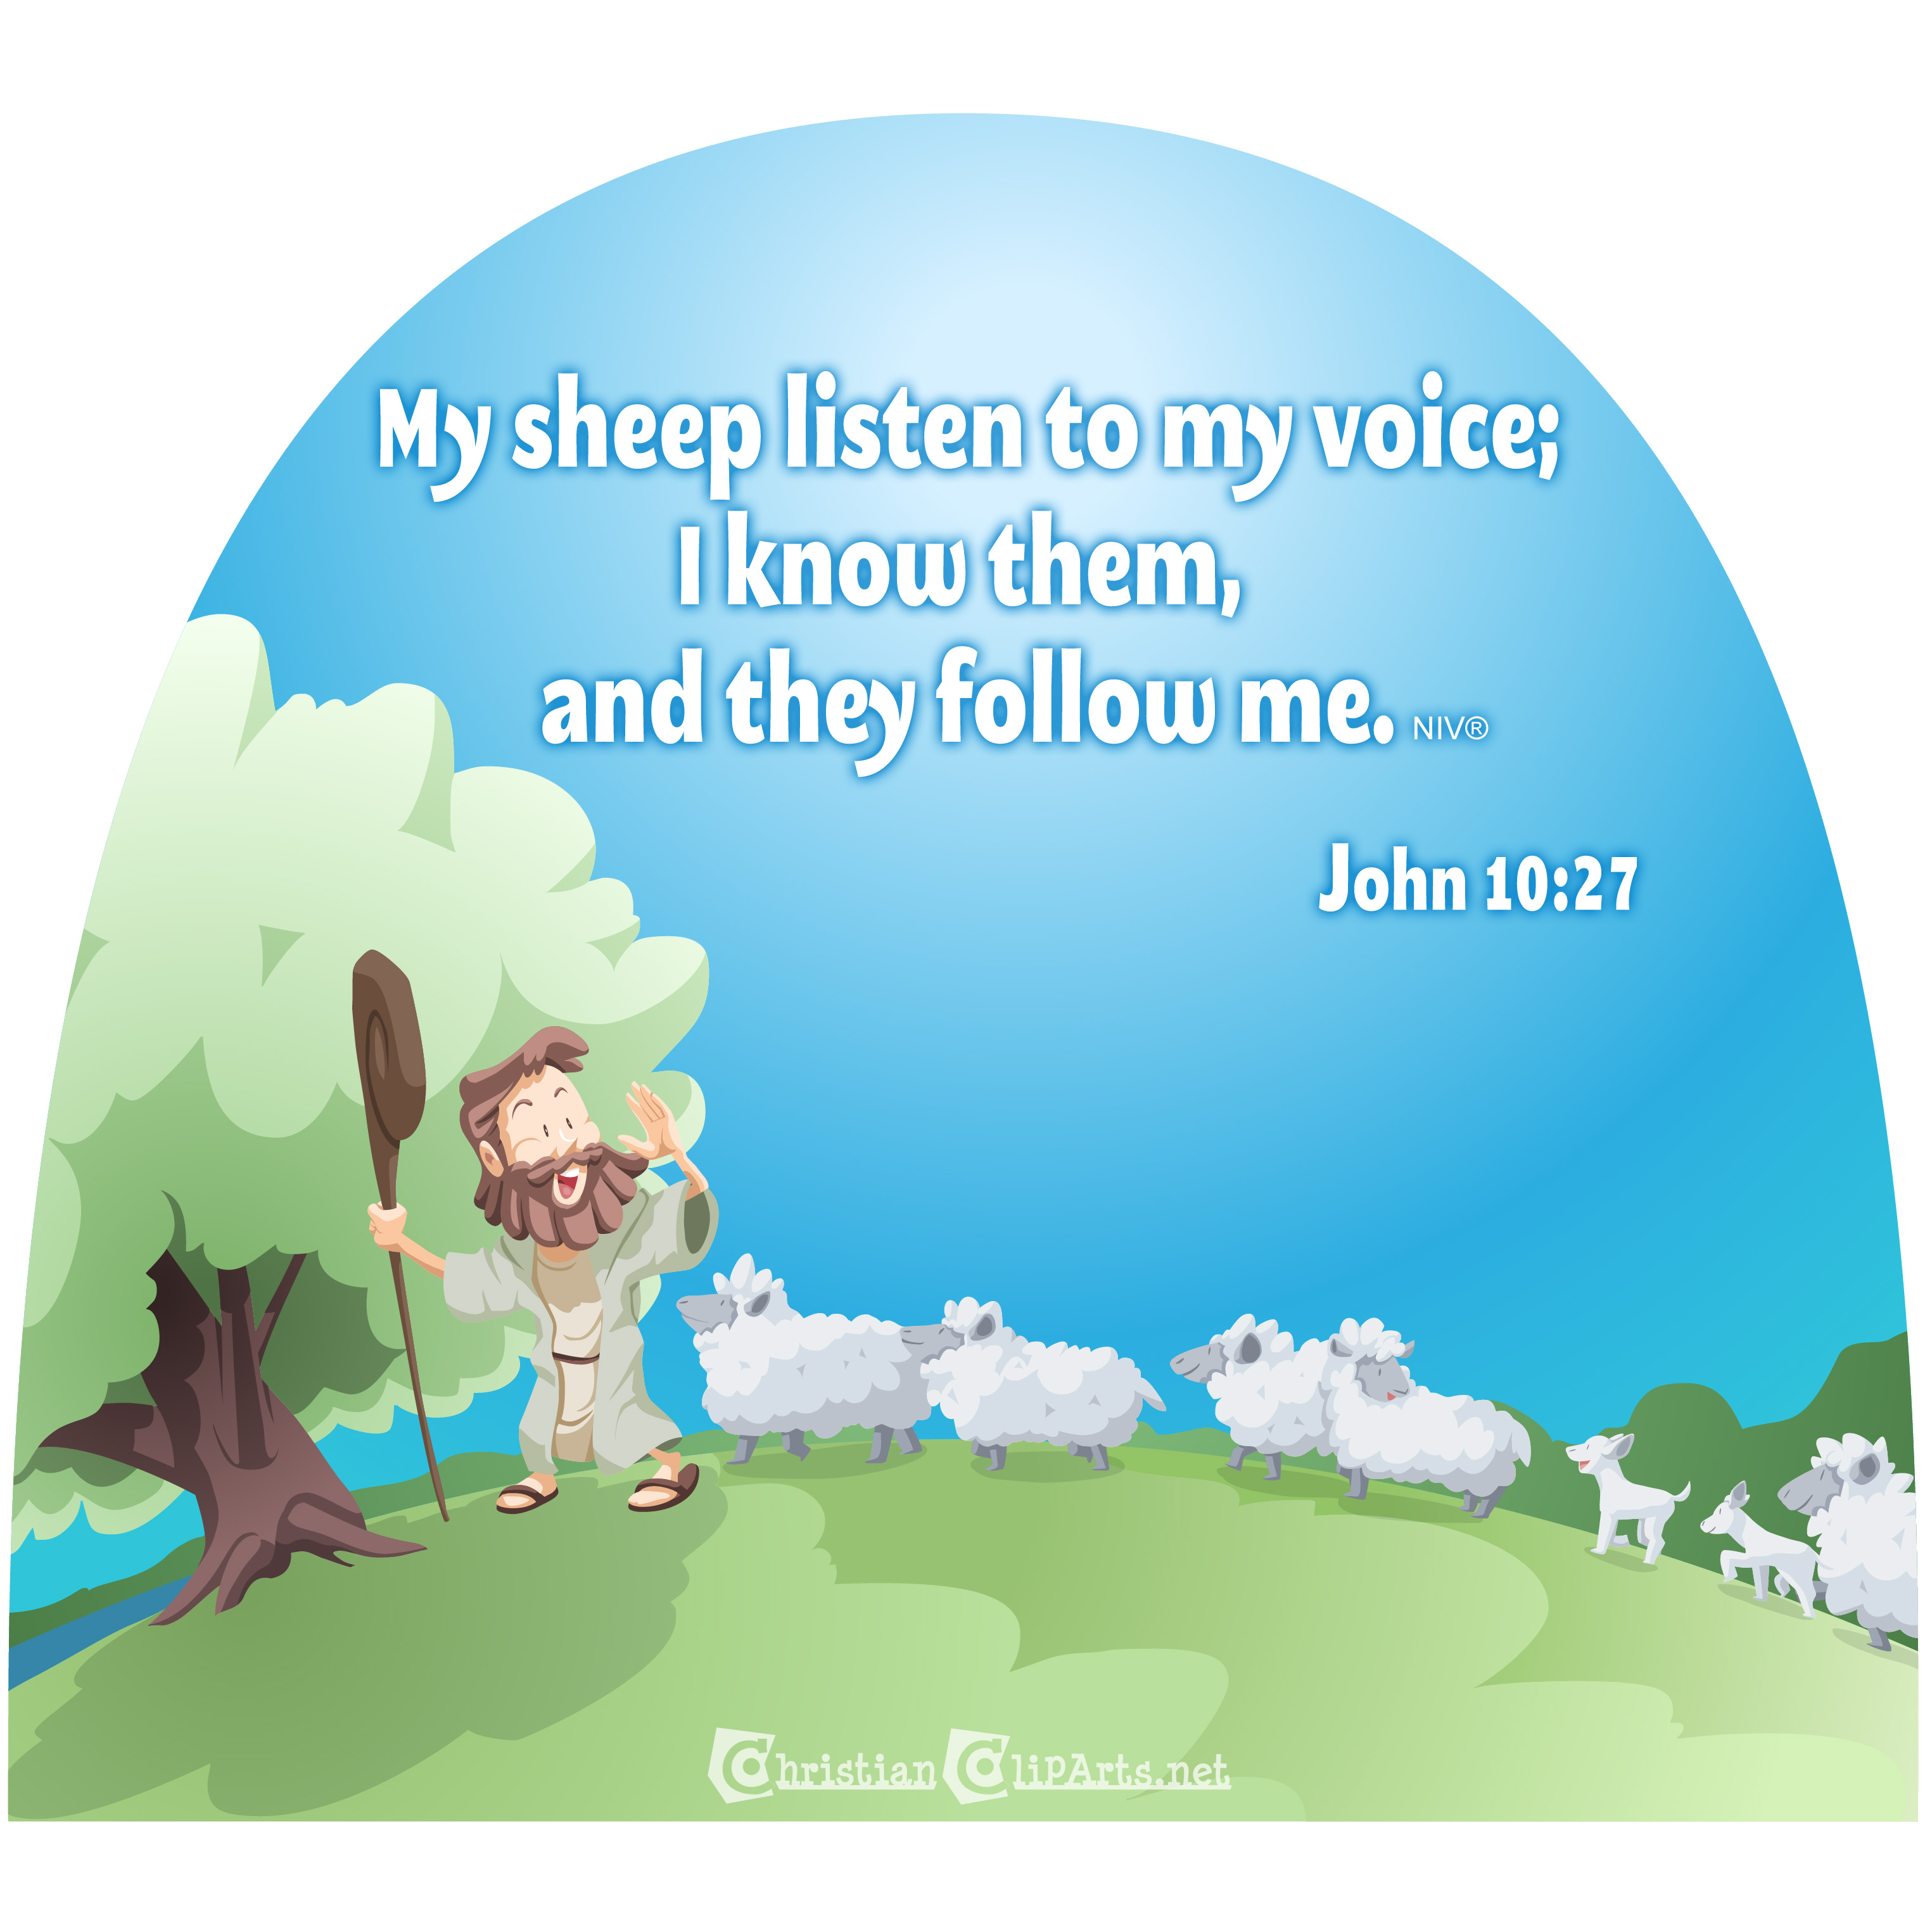 My sheep listen to my voice